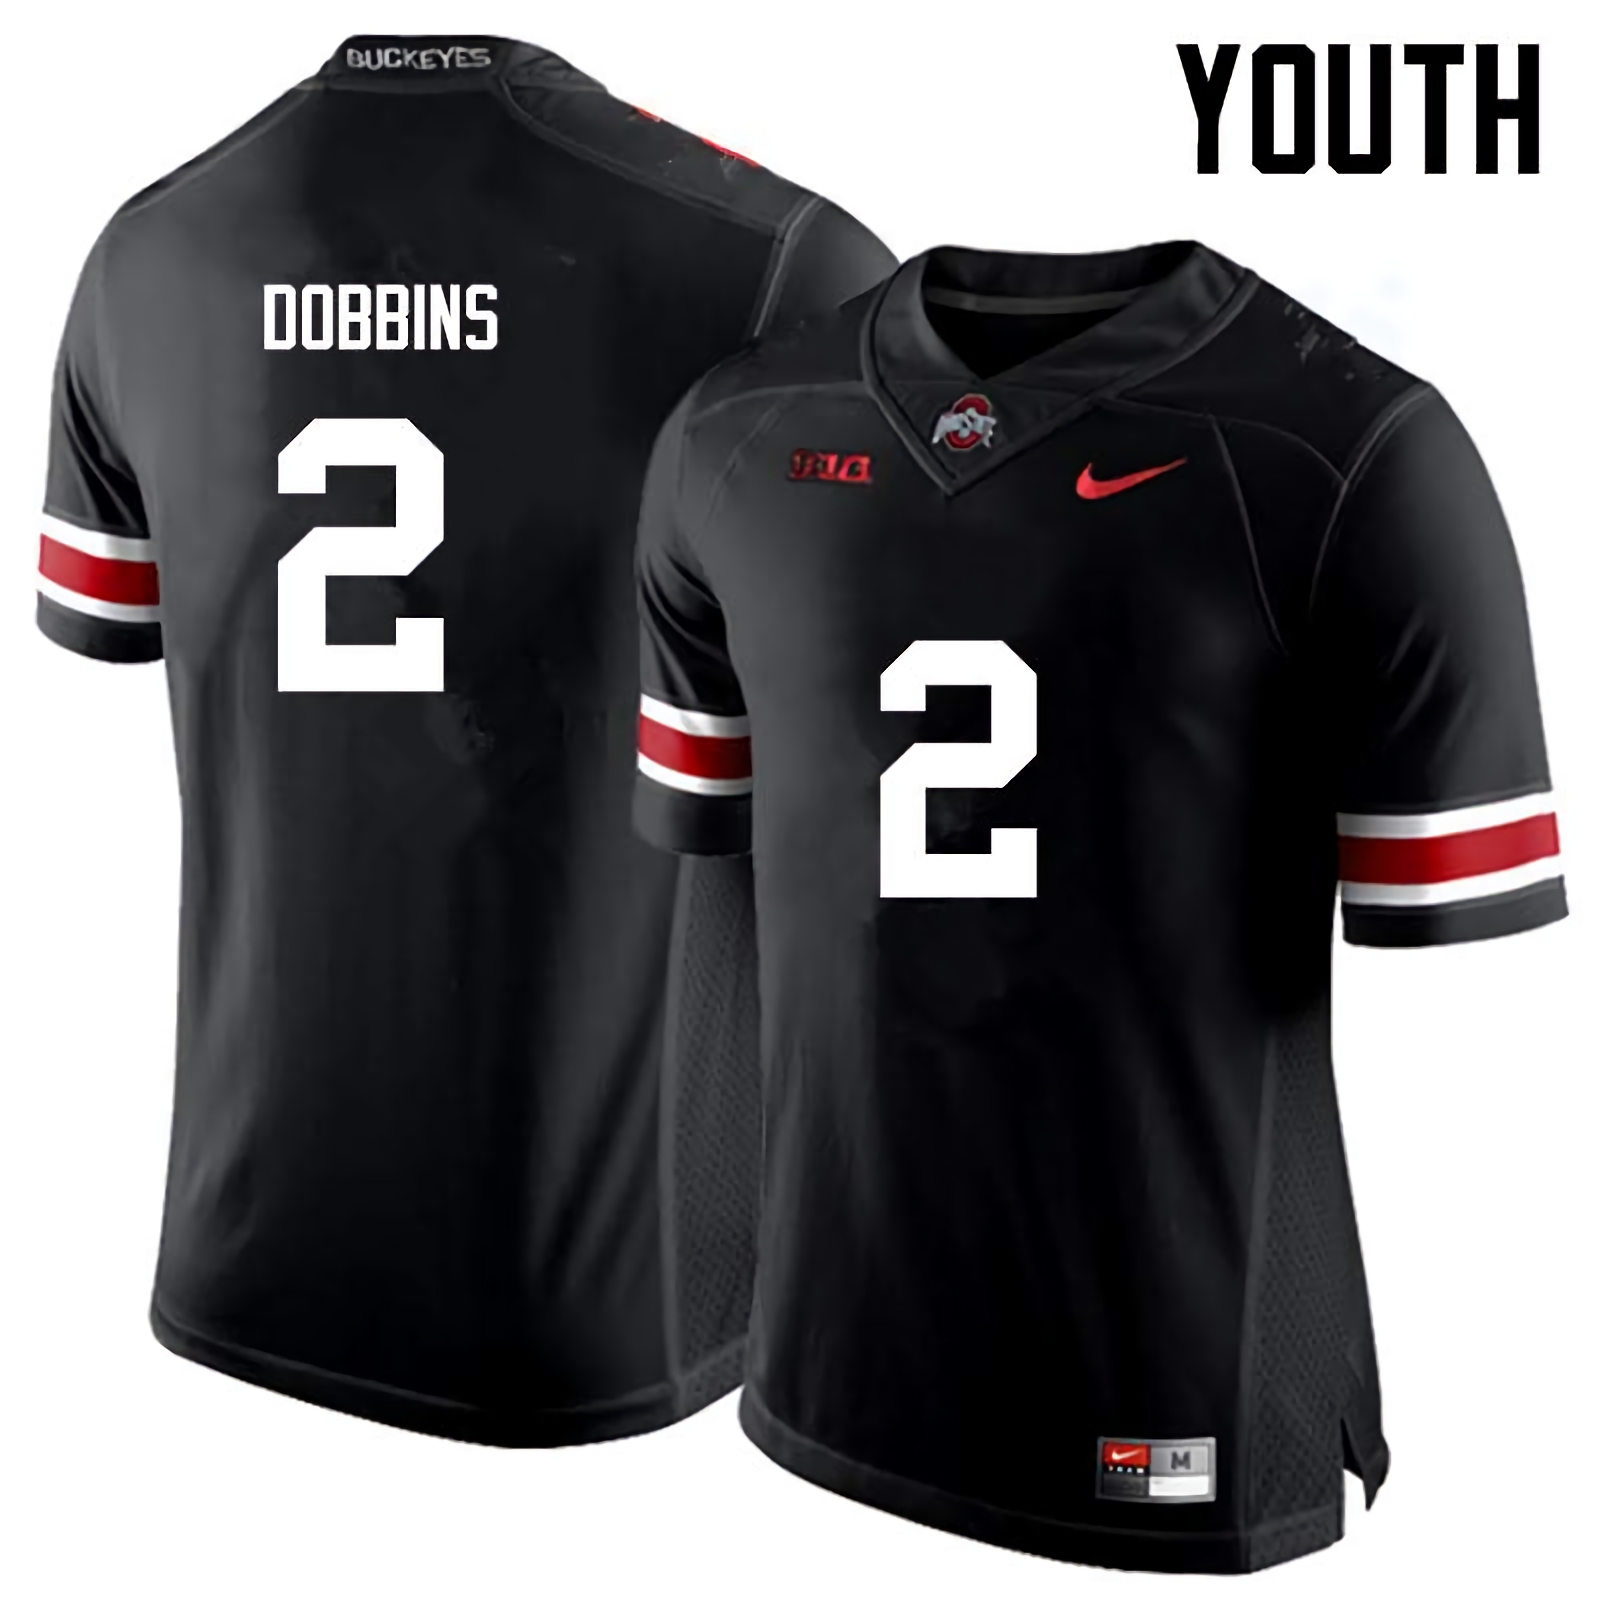 J.K. Dobbins Ohio State Buckeyes Youth NCAA #2 Nike Black College Stitched Football Jersey BKU3756BW